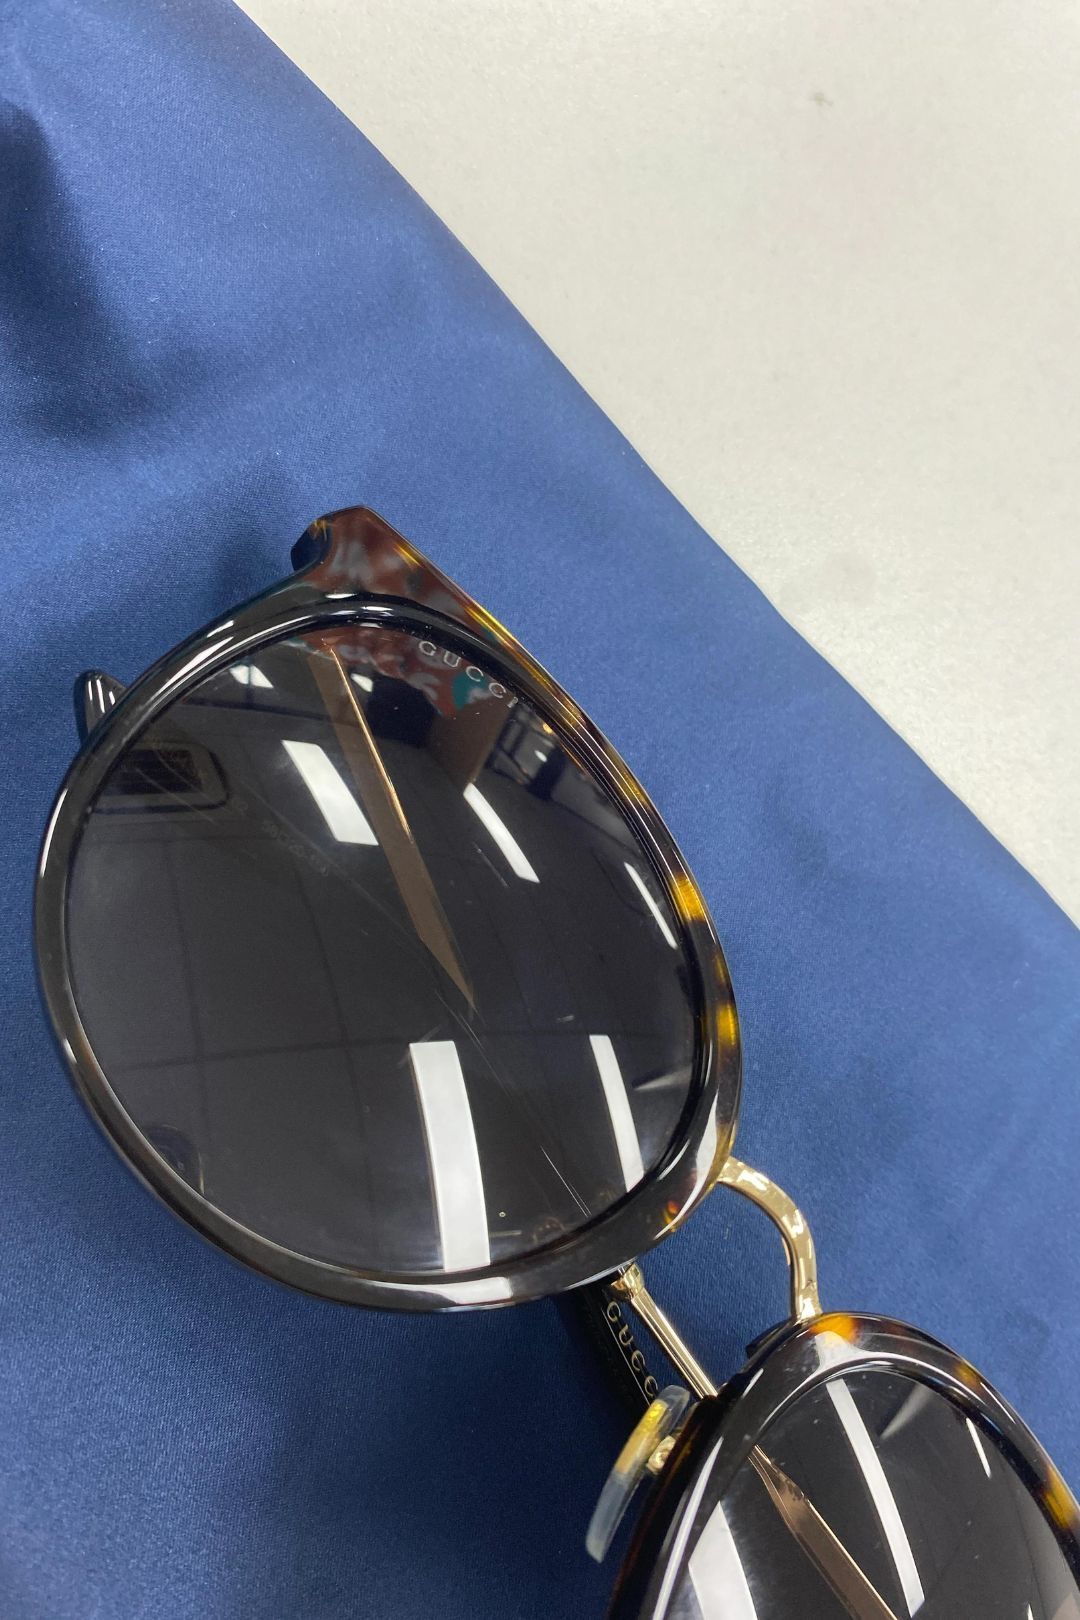 Gucci - Round Frame Sunglasses GG 02004SK 002